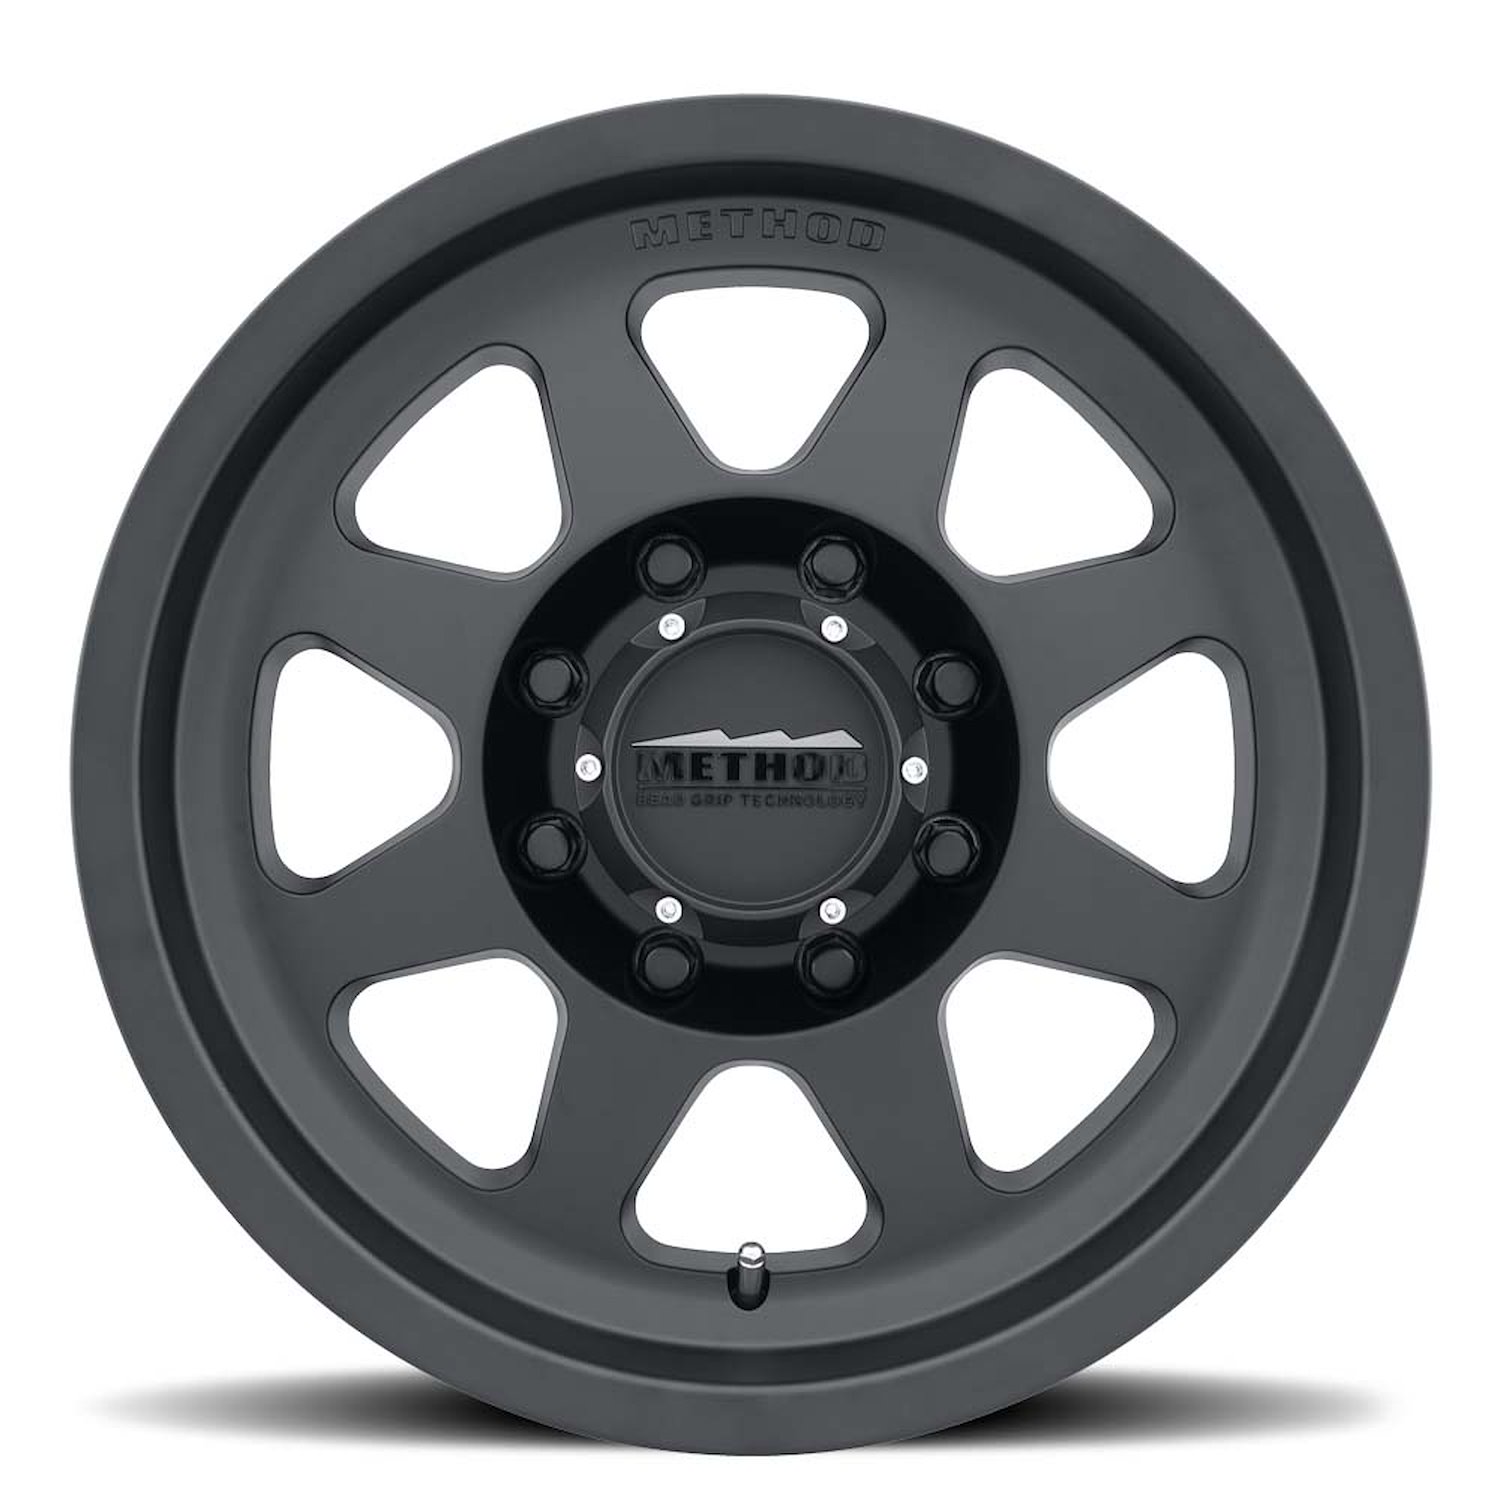 MR70178580500 TRAIL MR701 Bead Grip Wheel [Size: 17" x 8.5"] Matte Black